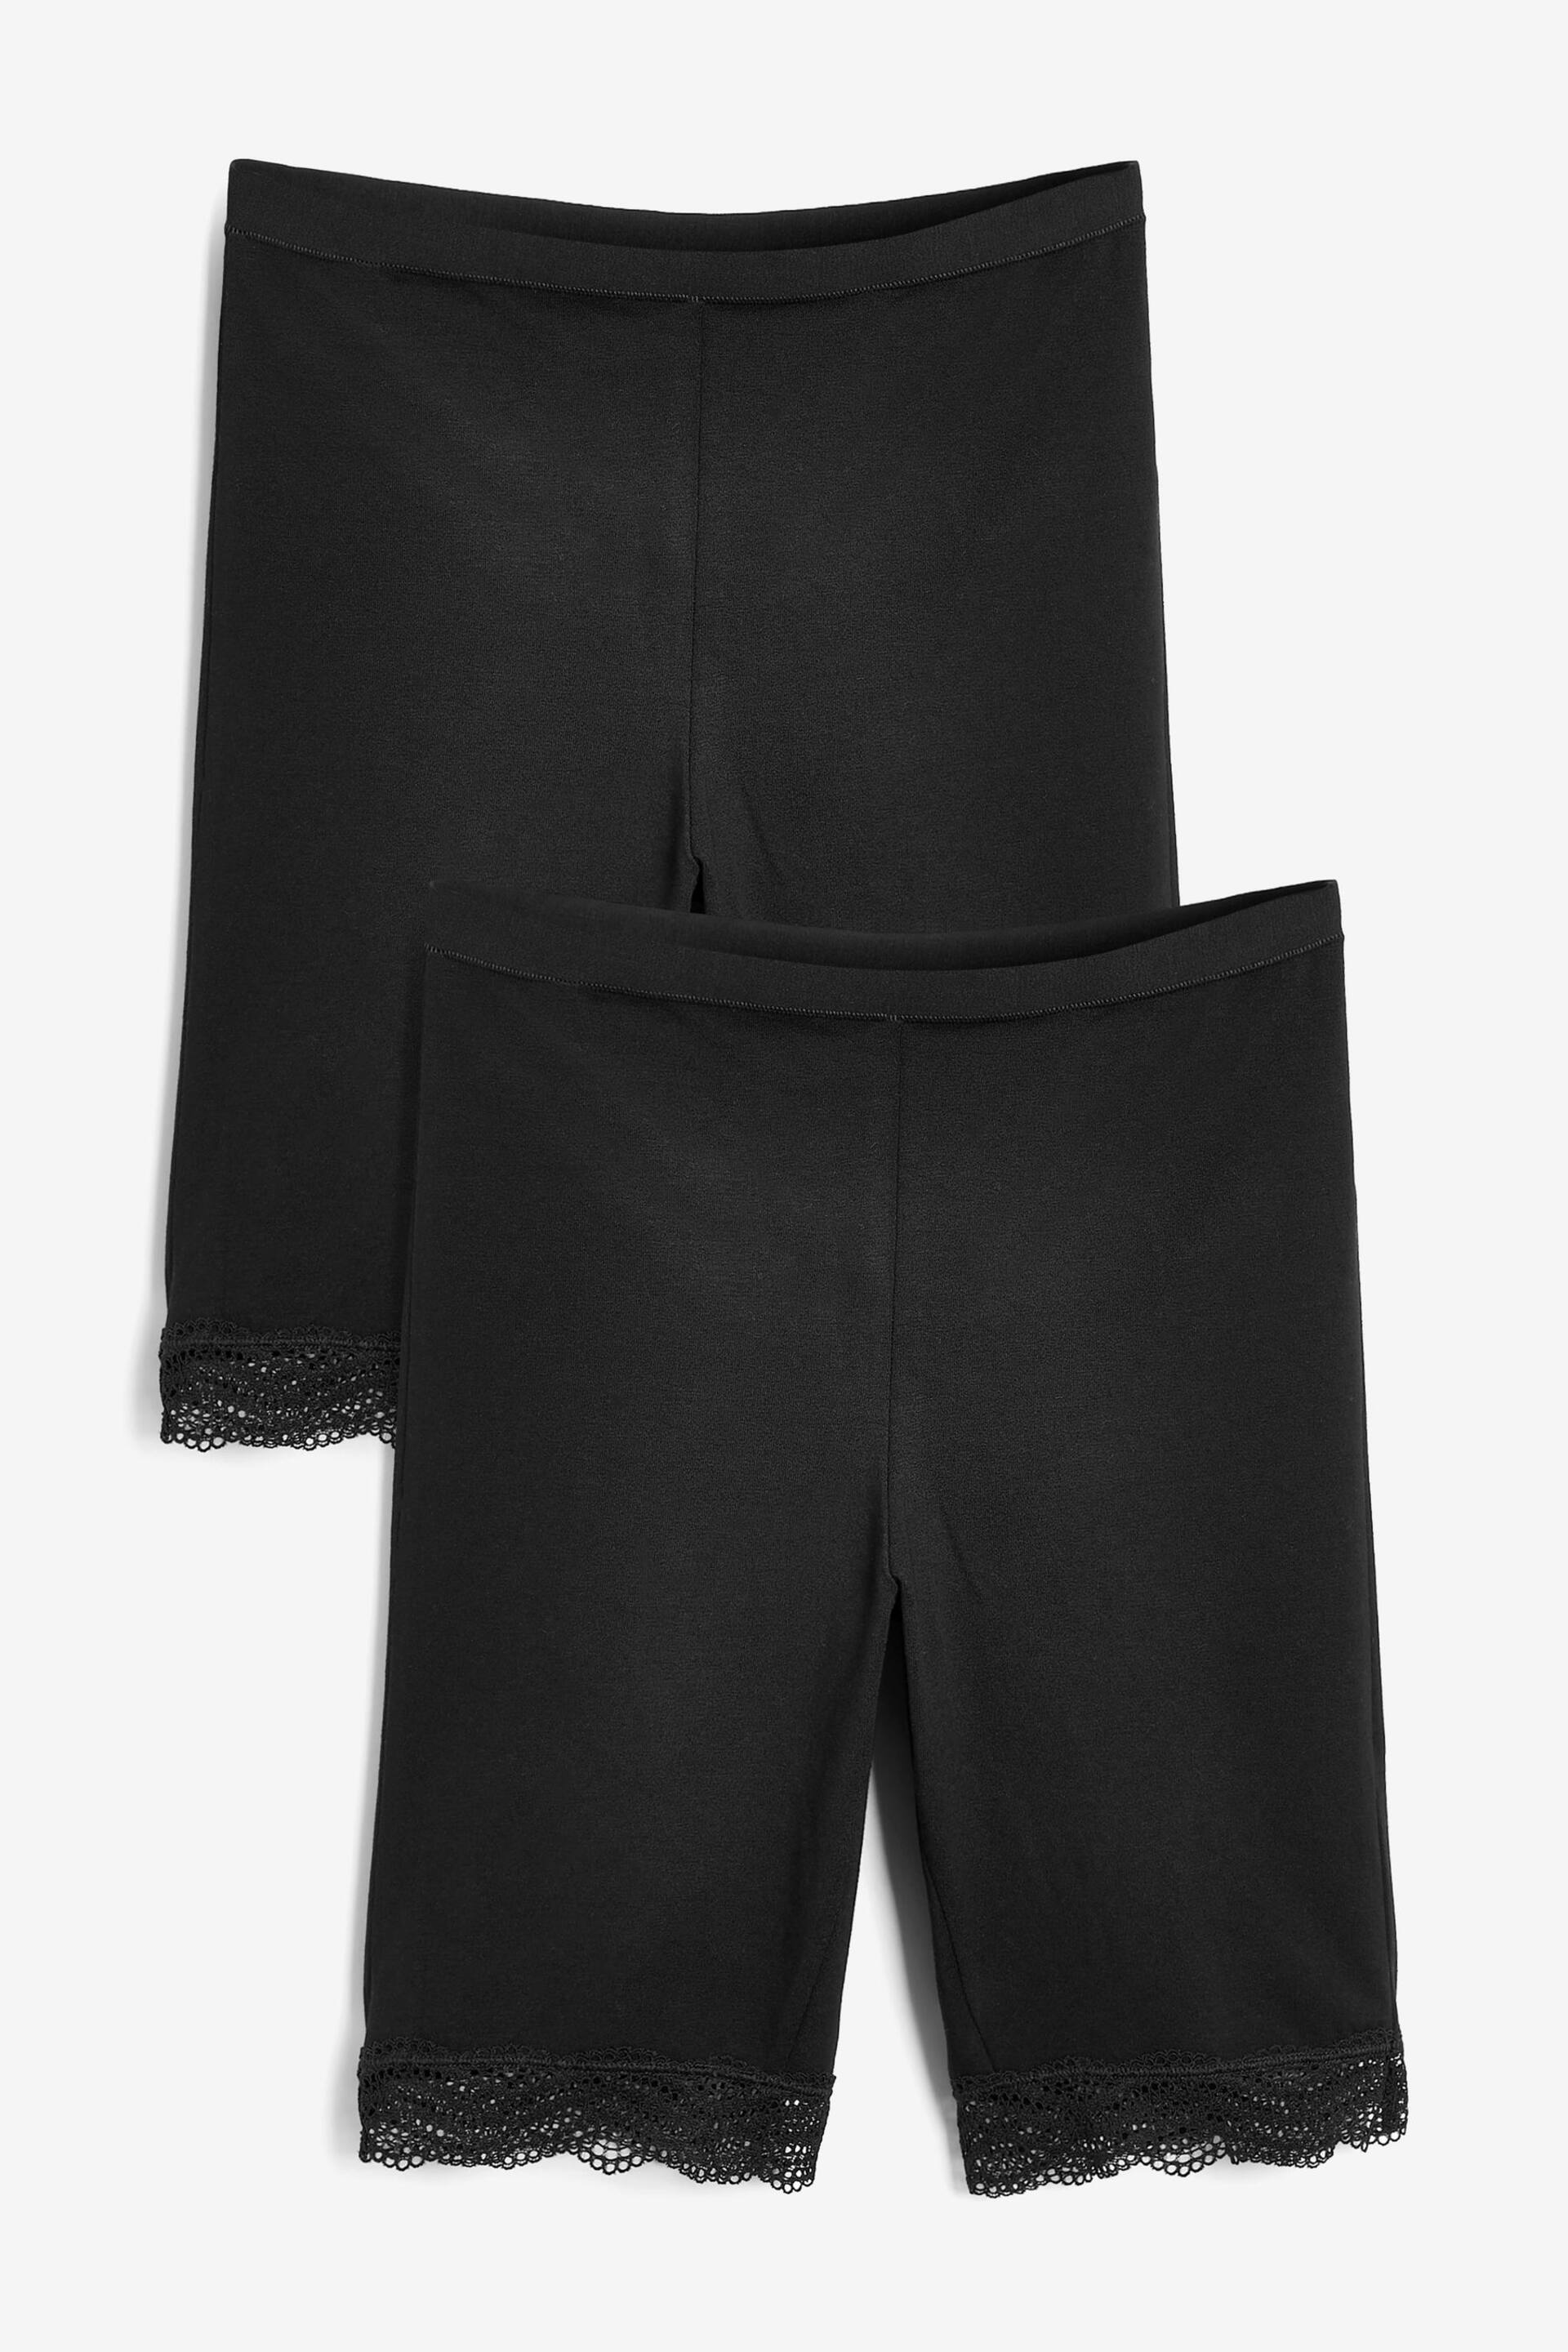 Black Cotton Blend Anti-Chafe Shorts 2 Pack - Image 2 of 6